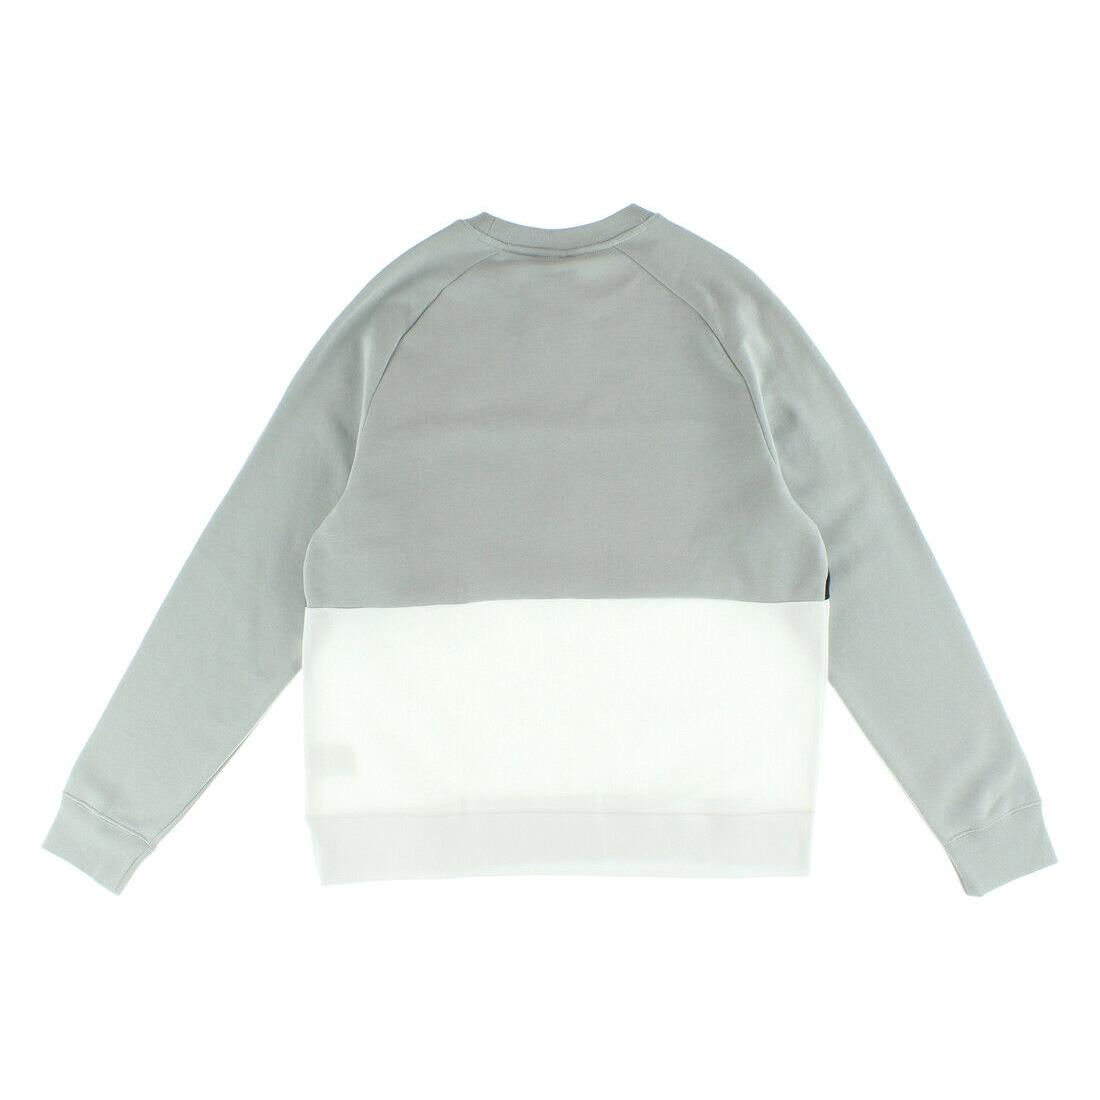 Nike Air Crewneck LS Sweatshirt Mens Active Shirts Tees Size M Color: Grey